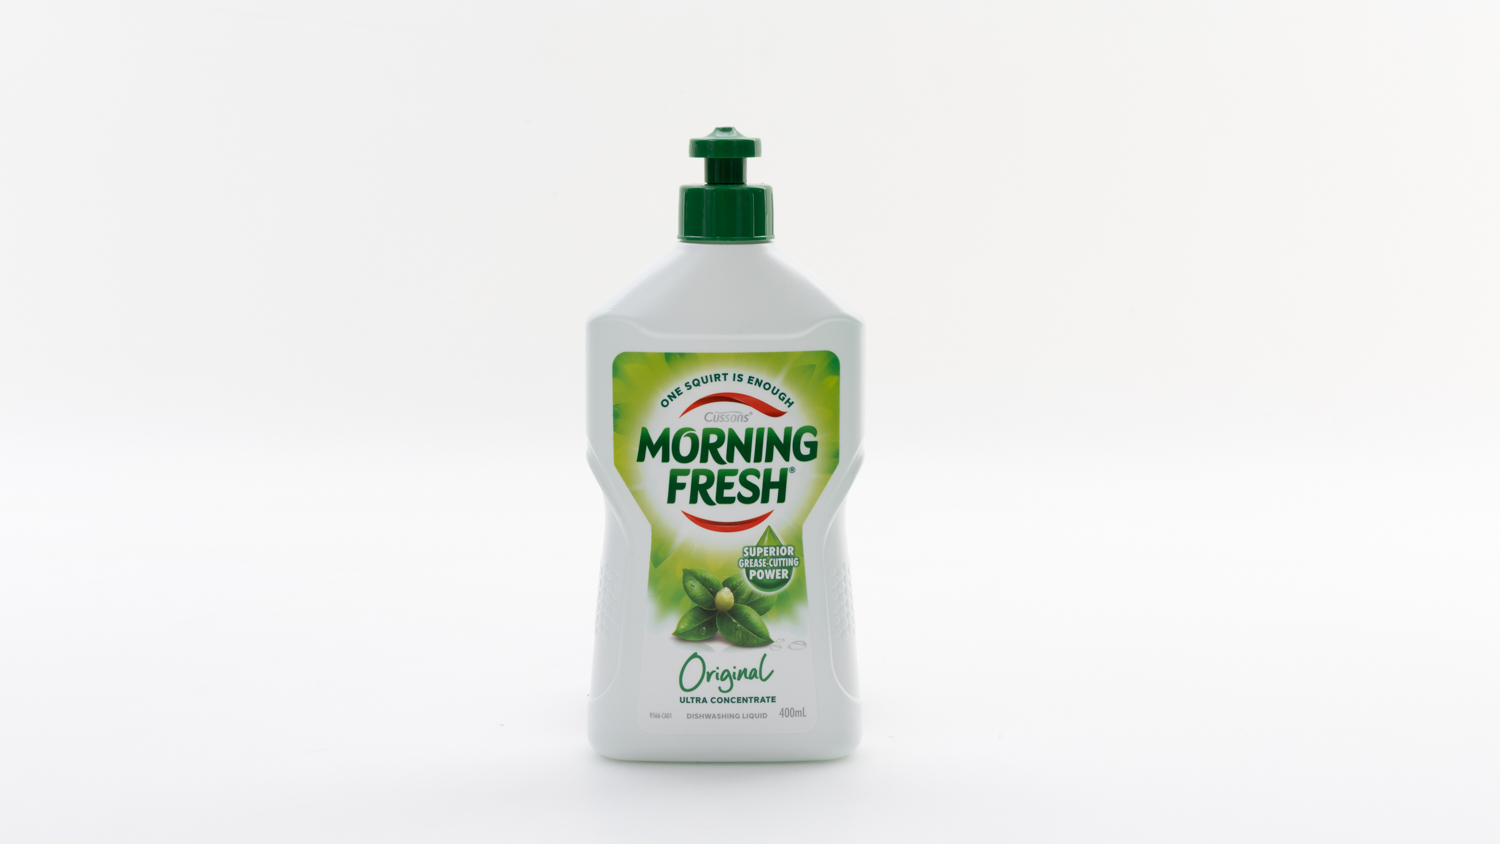 Morning Fresh Original Ultra Concentrate Dishwashing Liquid carousel image